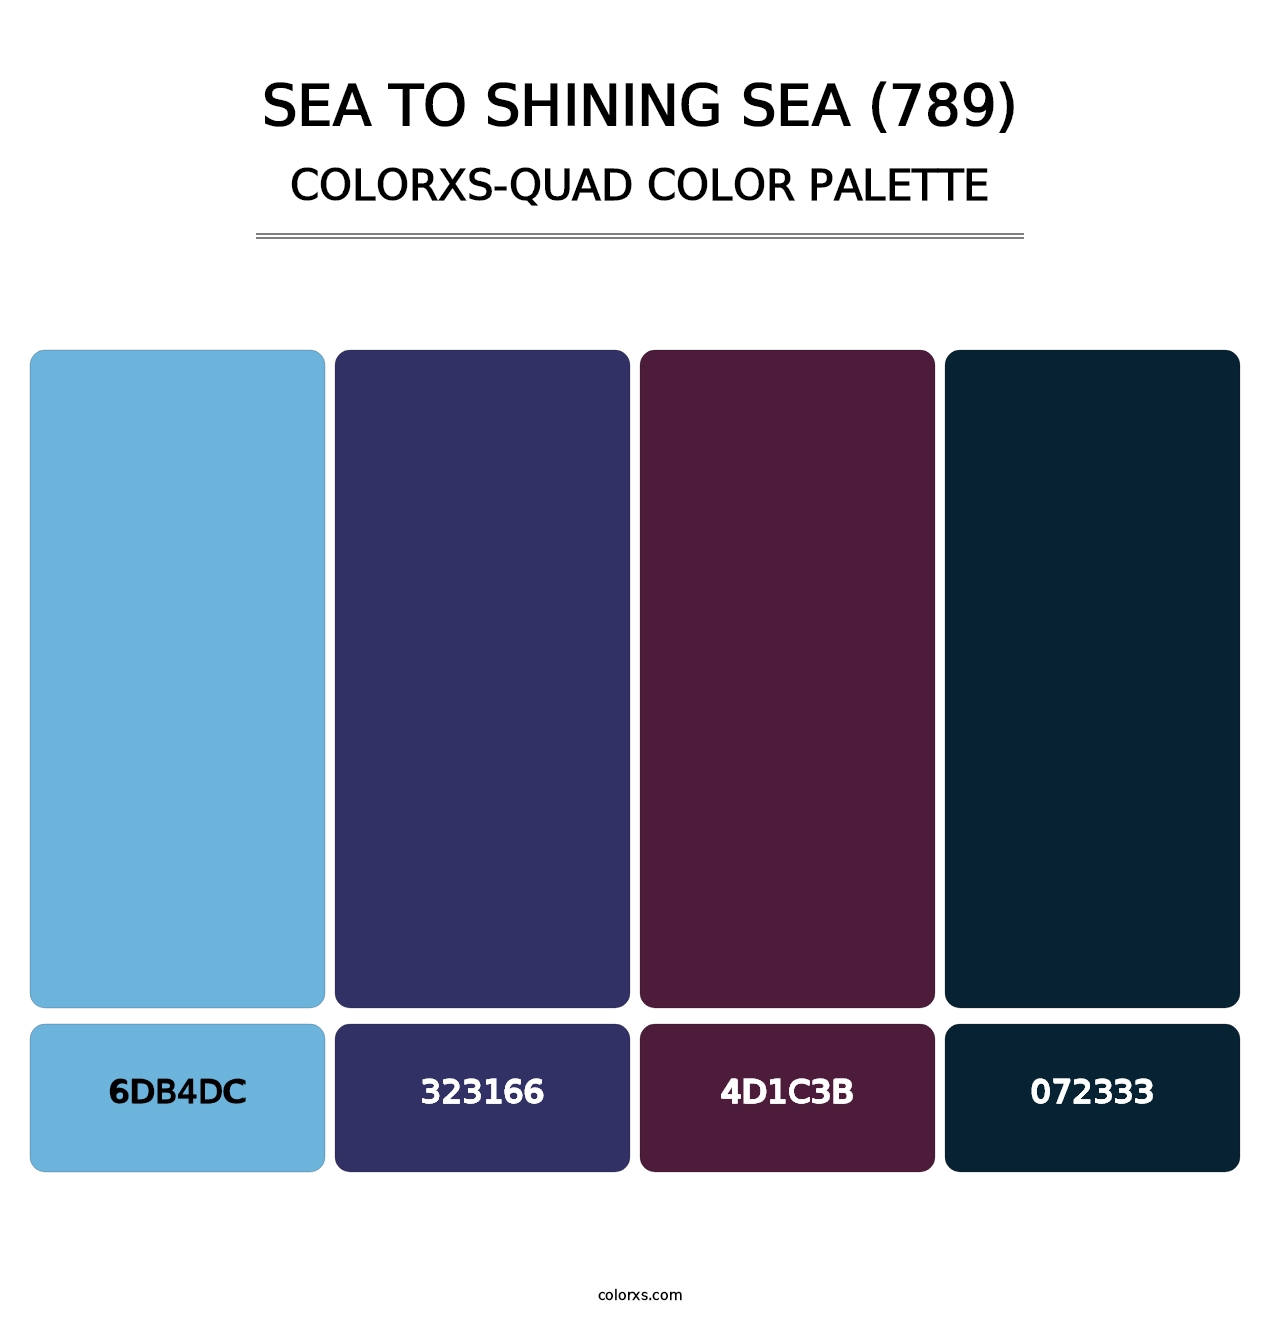 Sea to Shining Sea (789) - Colorxs Quad Palette